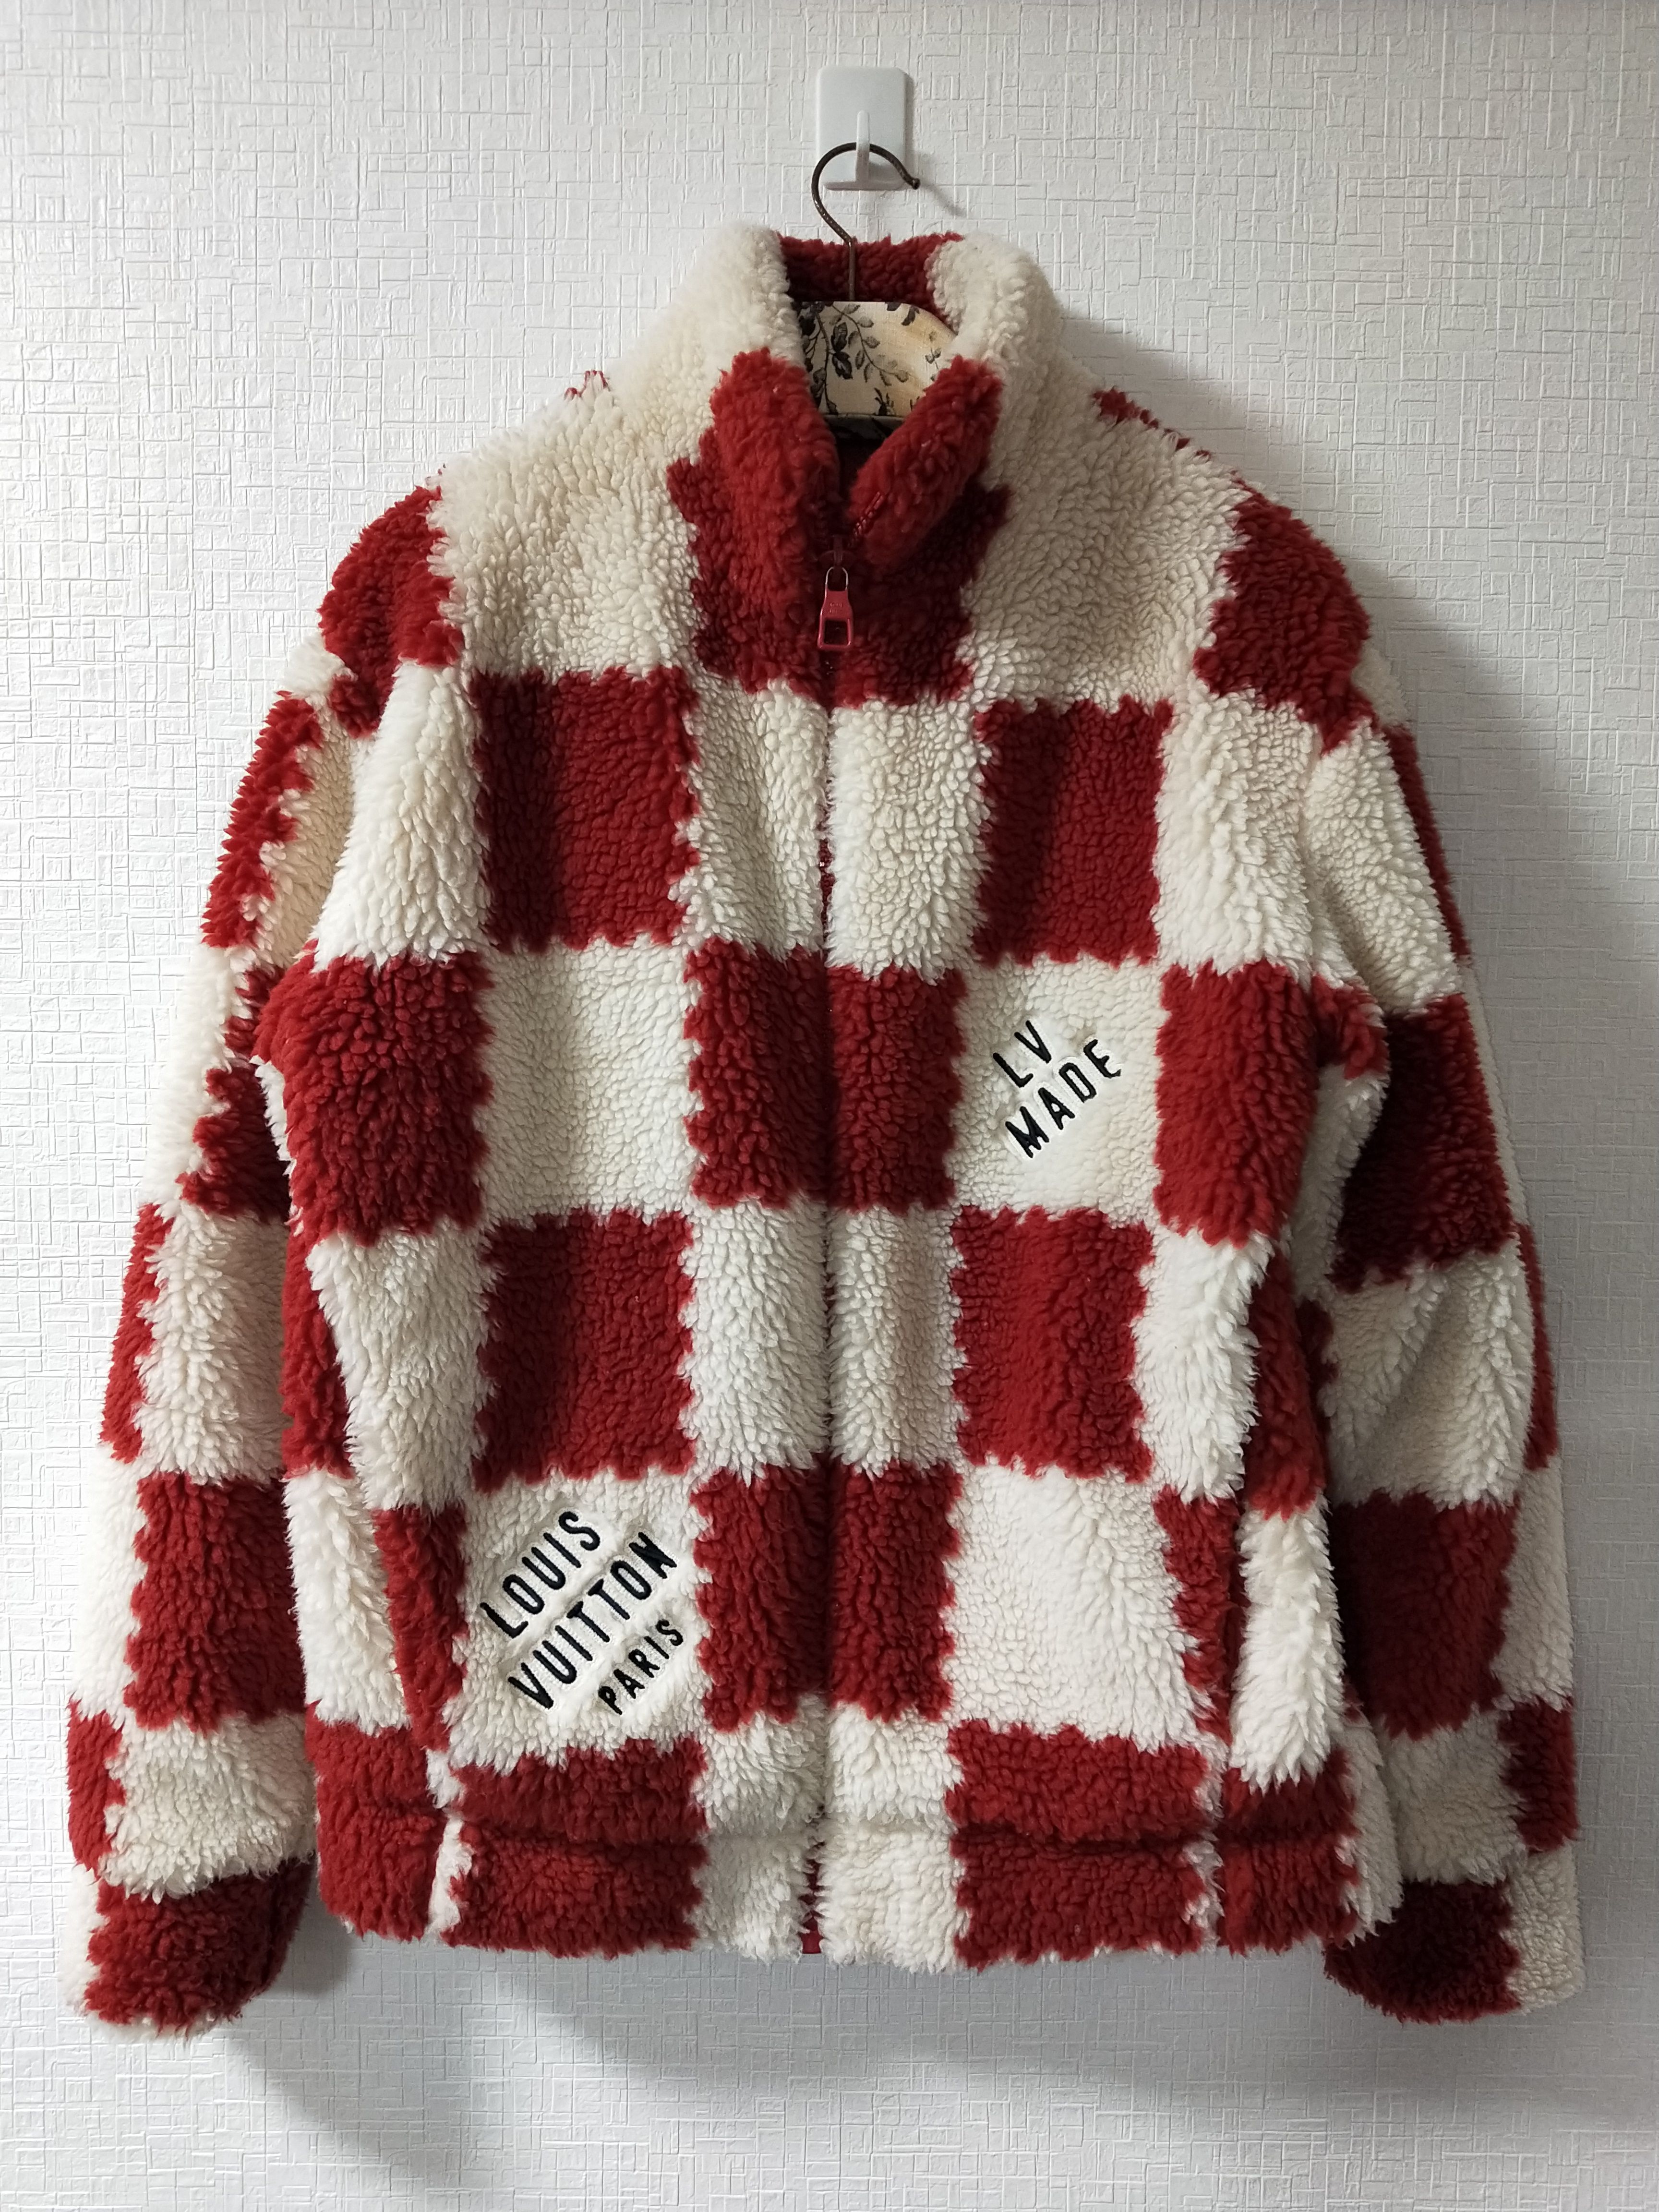 Louis Vuitton, Jackets & Coats, Louis Vuitton Nigo Jacquard Damier Red  Fleece Jacket